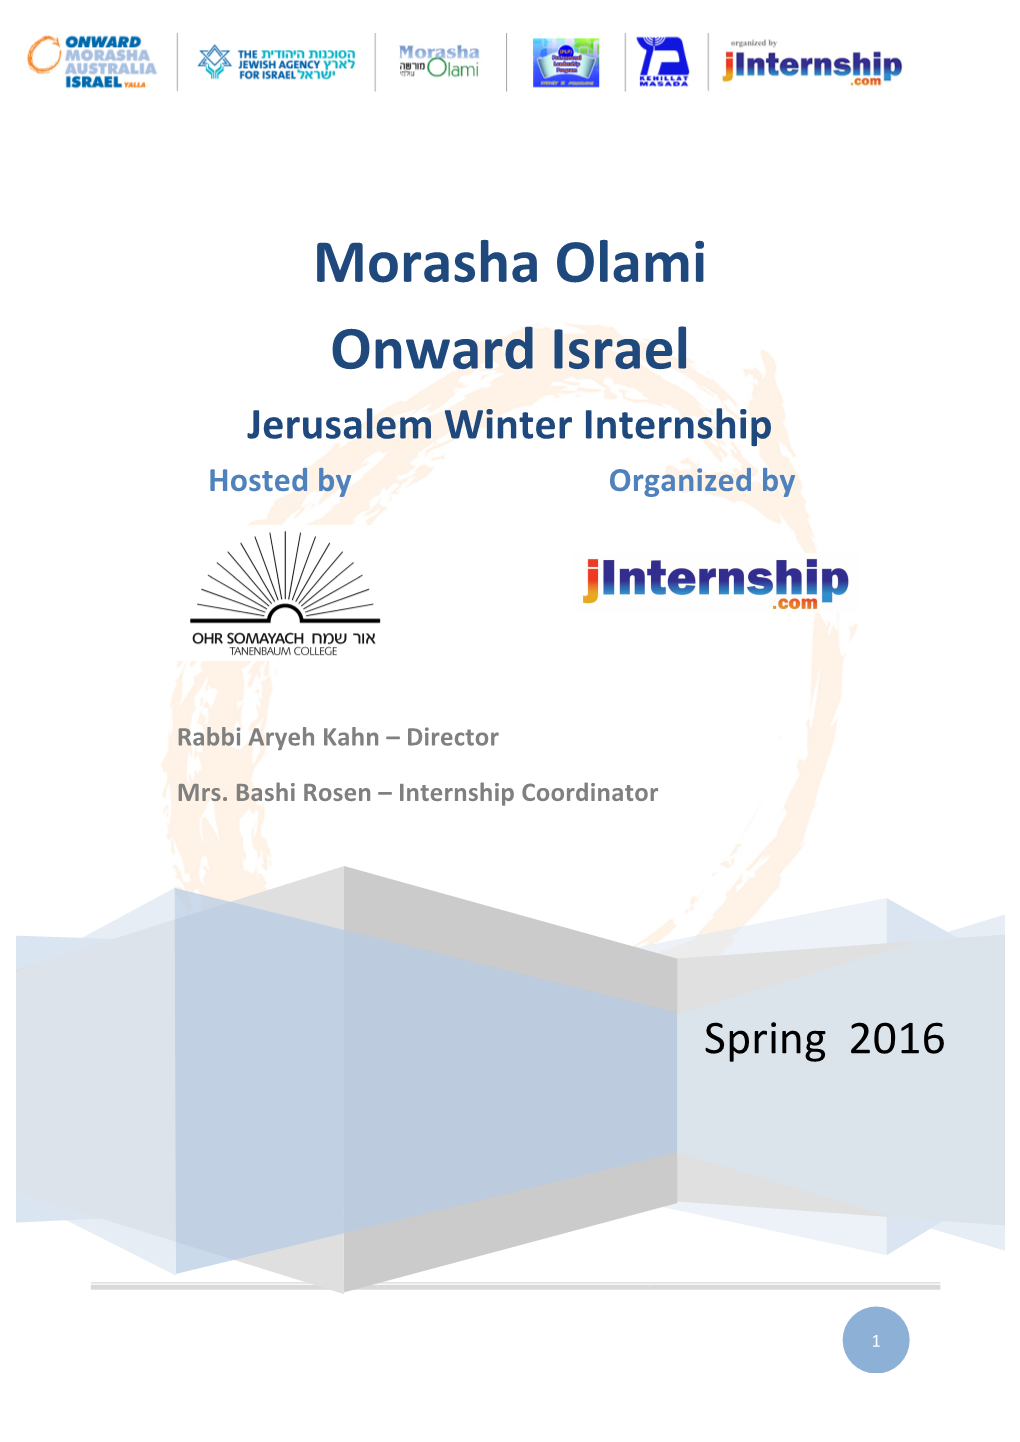 Morasha Olami Onward Israel Jerusalem Winter Internship Hosted by Organized By